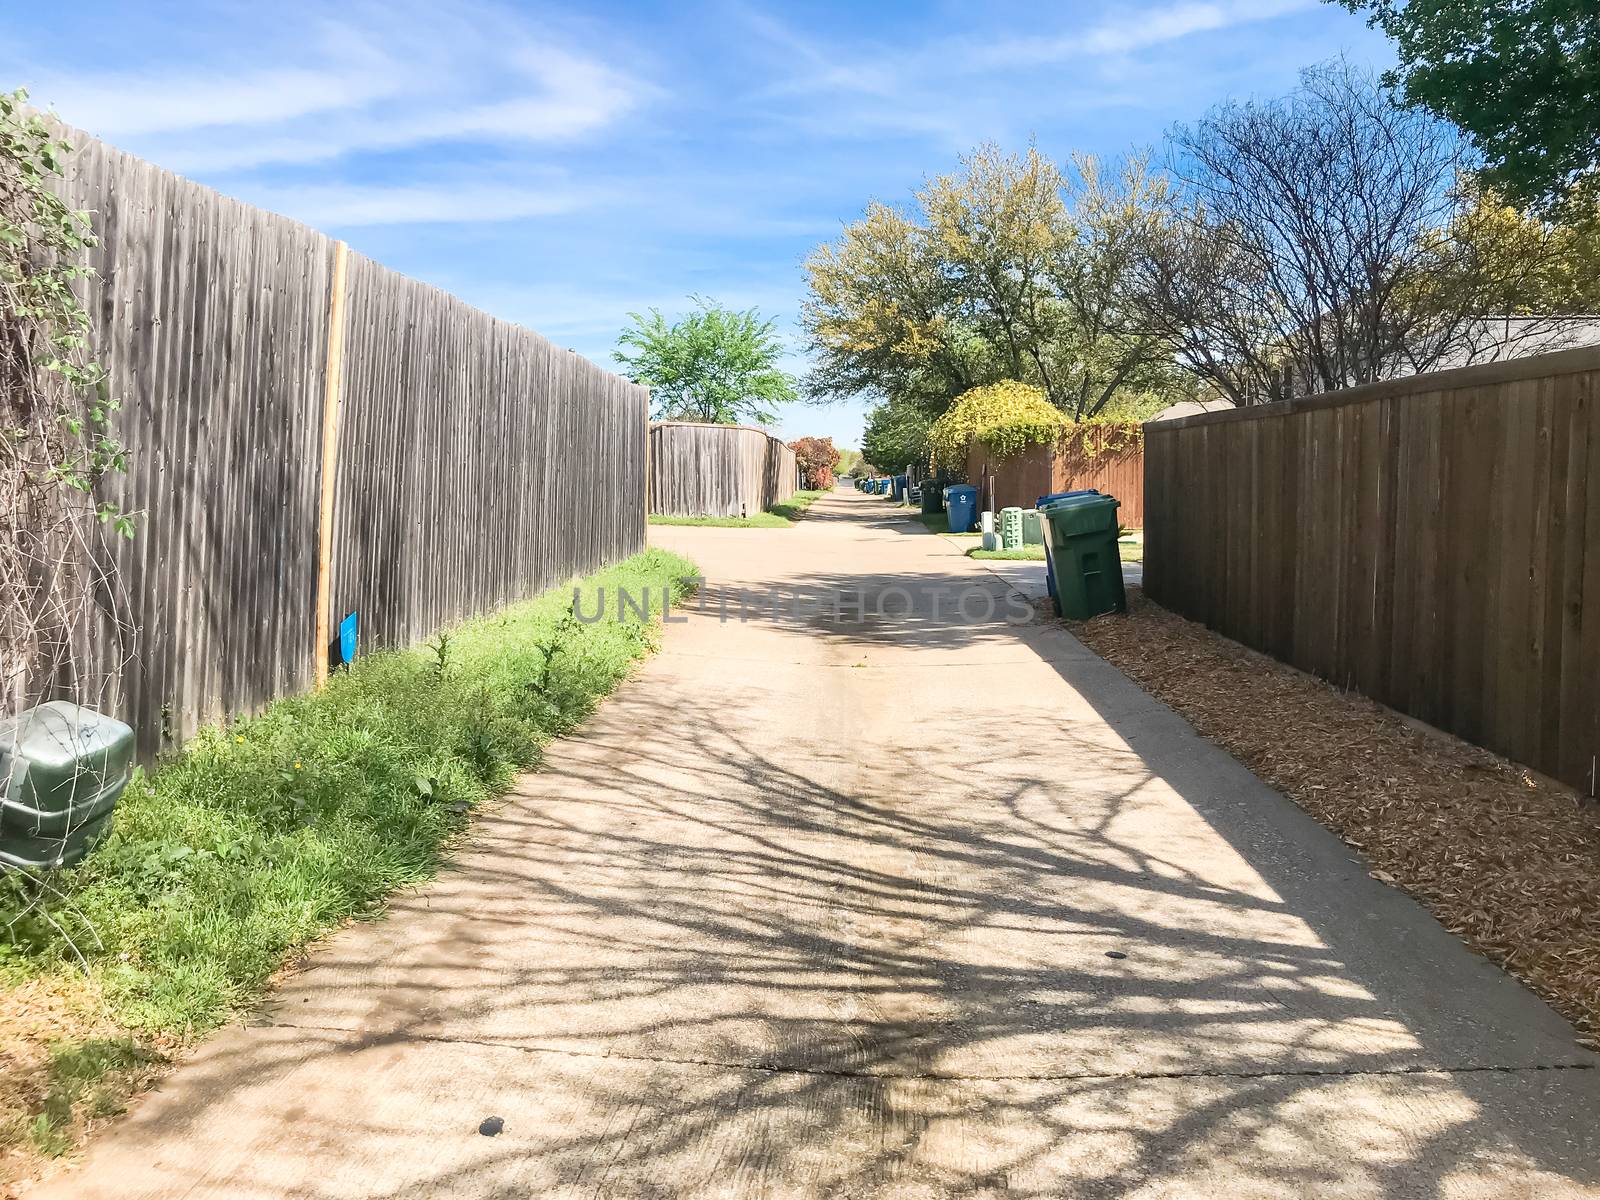 Quiet back alley in residential area near Dallas, Texas by trongnguyen